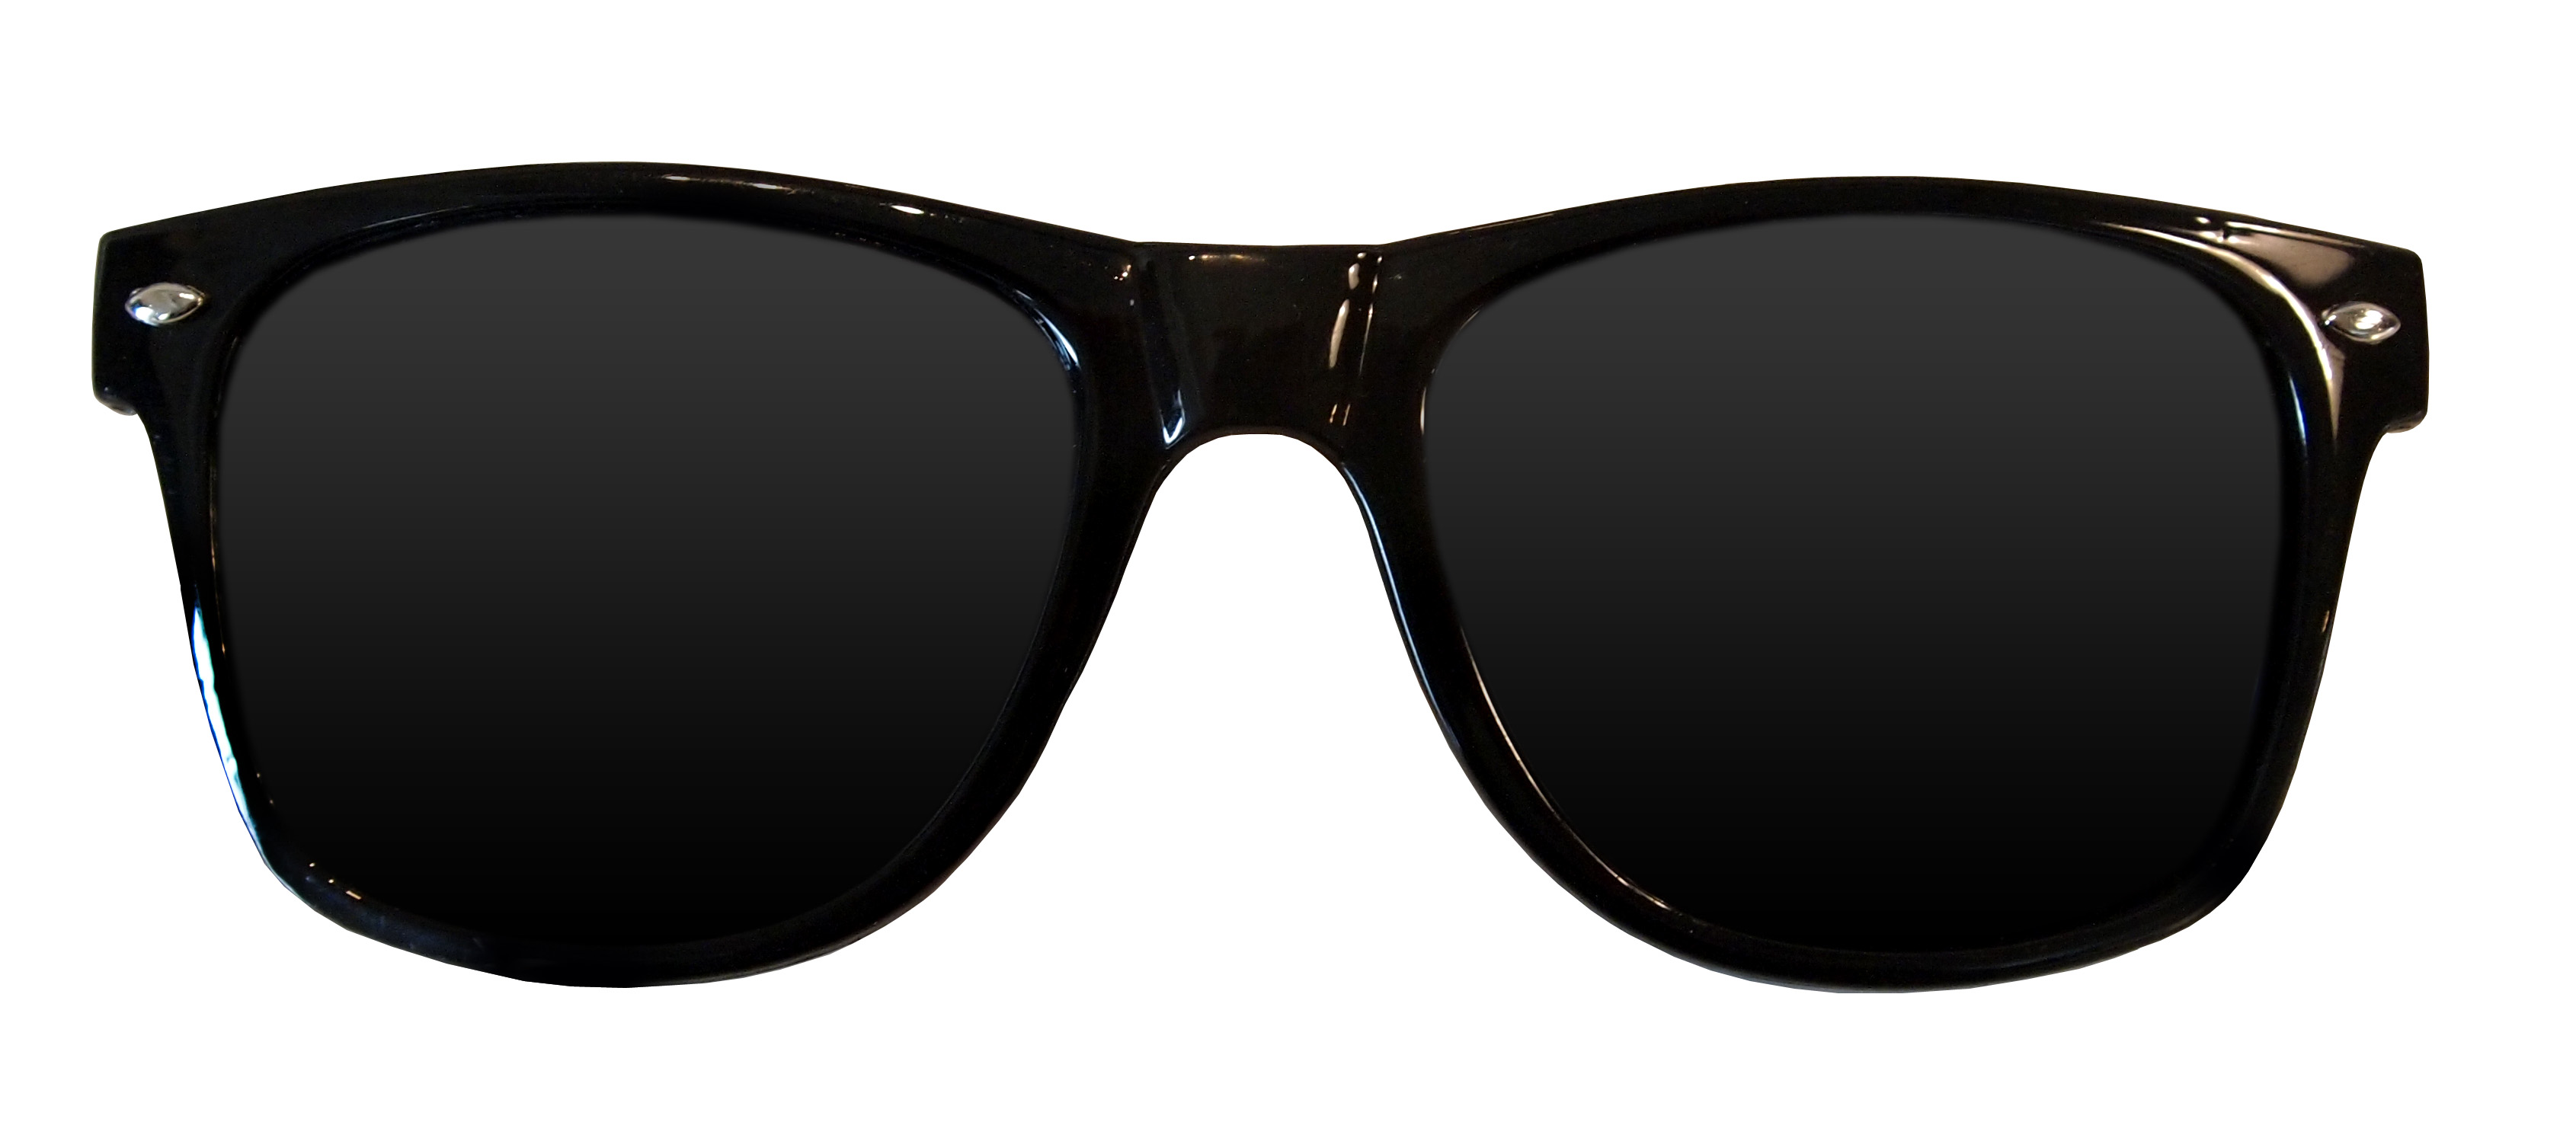 Aviator Sunglasses Clipart - Gallery